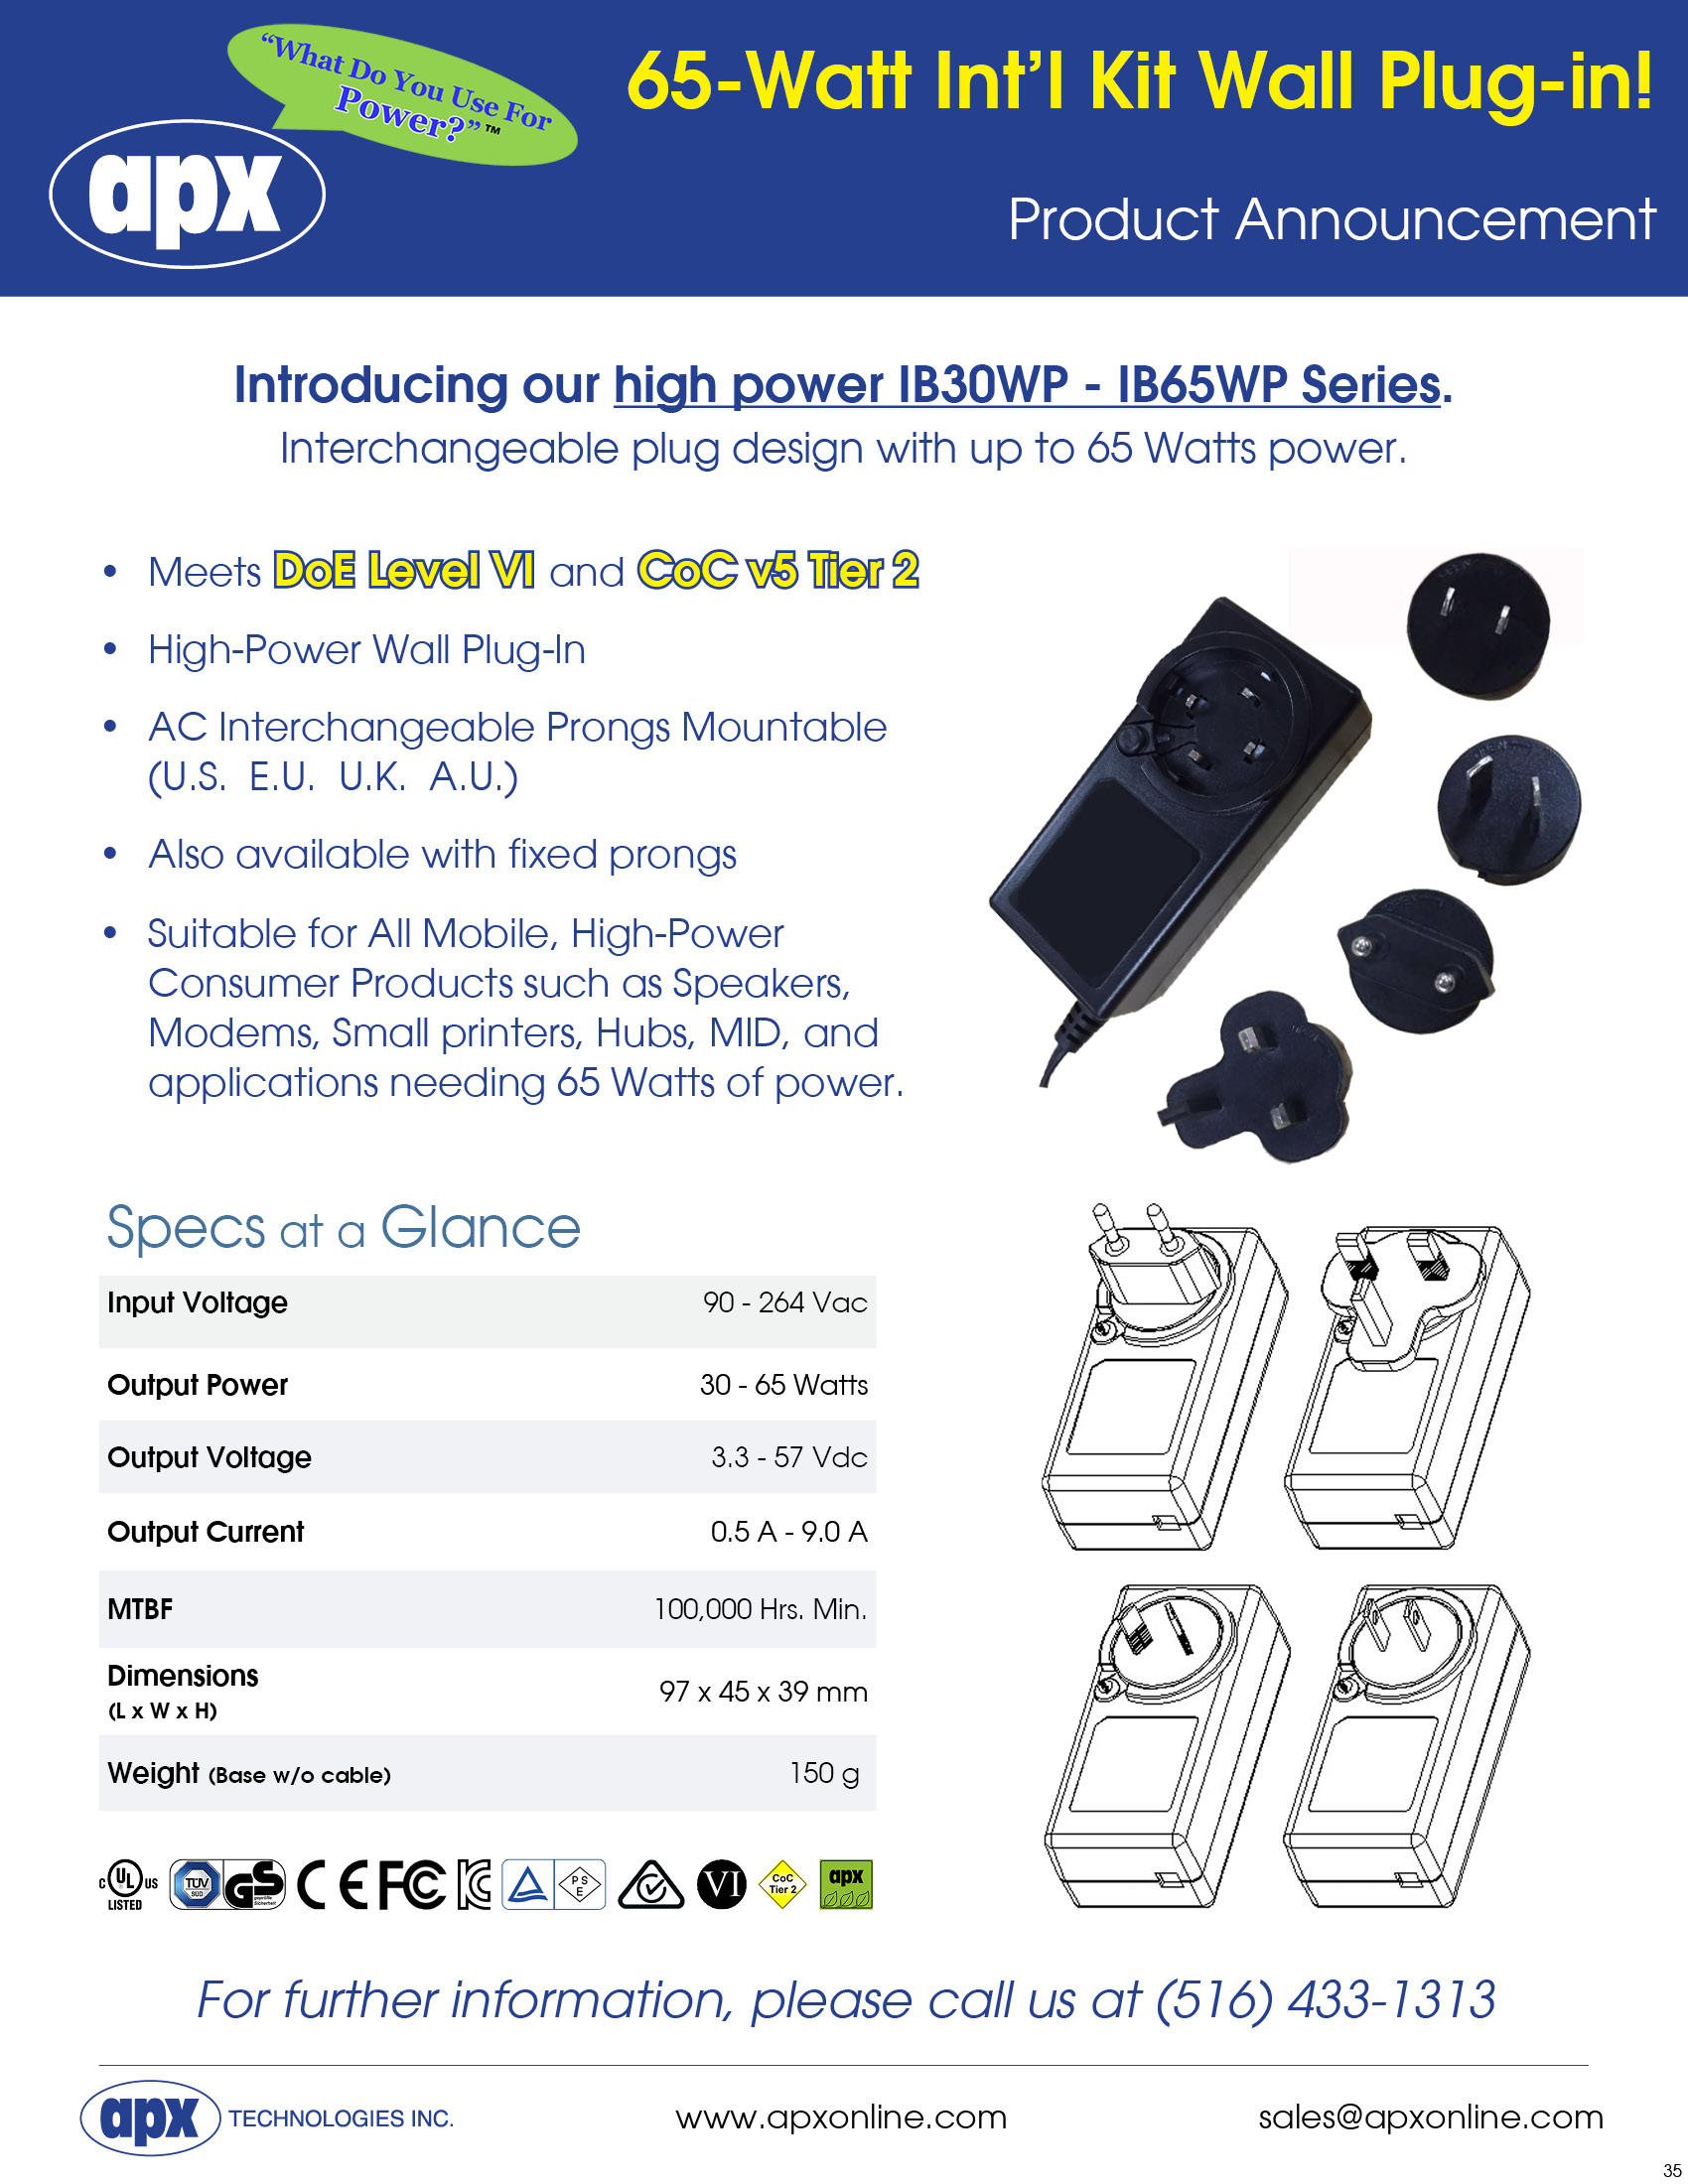 IB30WP - IB65WP Series Product Announcement (38)